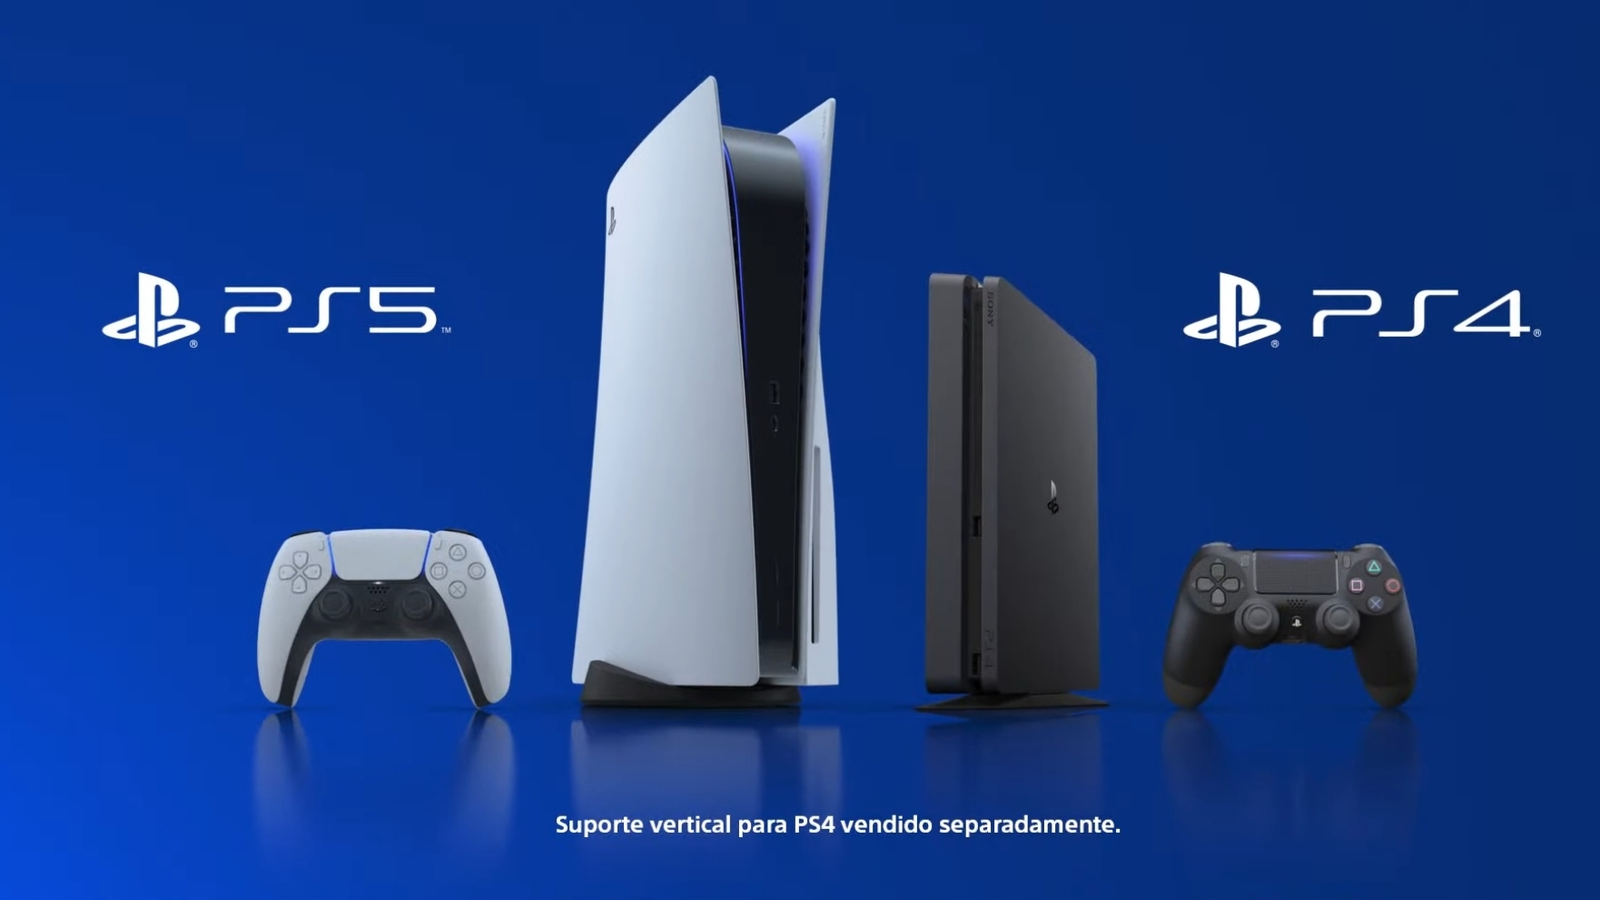 Sony promove evento sobre o PlayStation 5 nesta quinta; saiba o